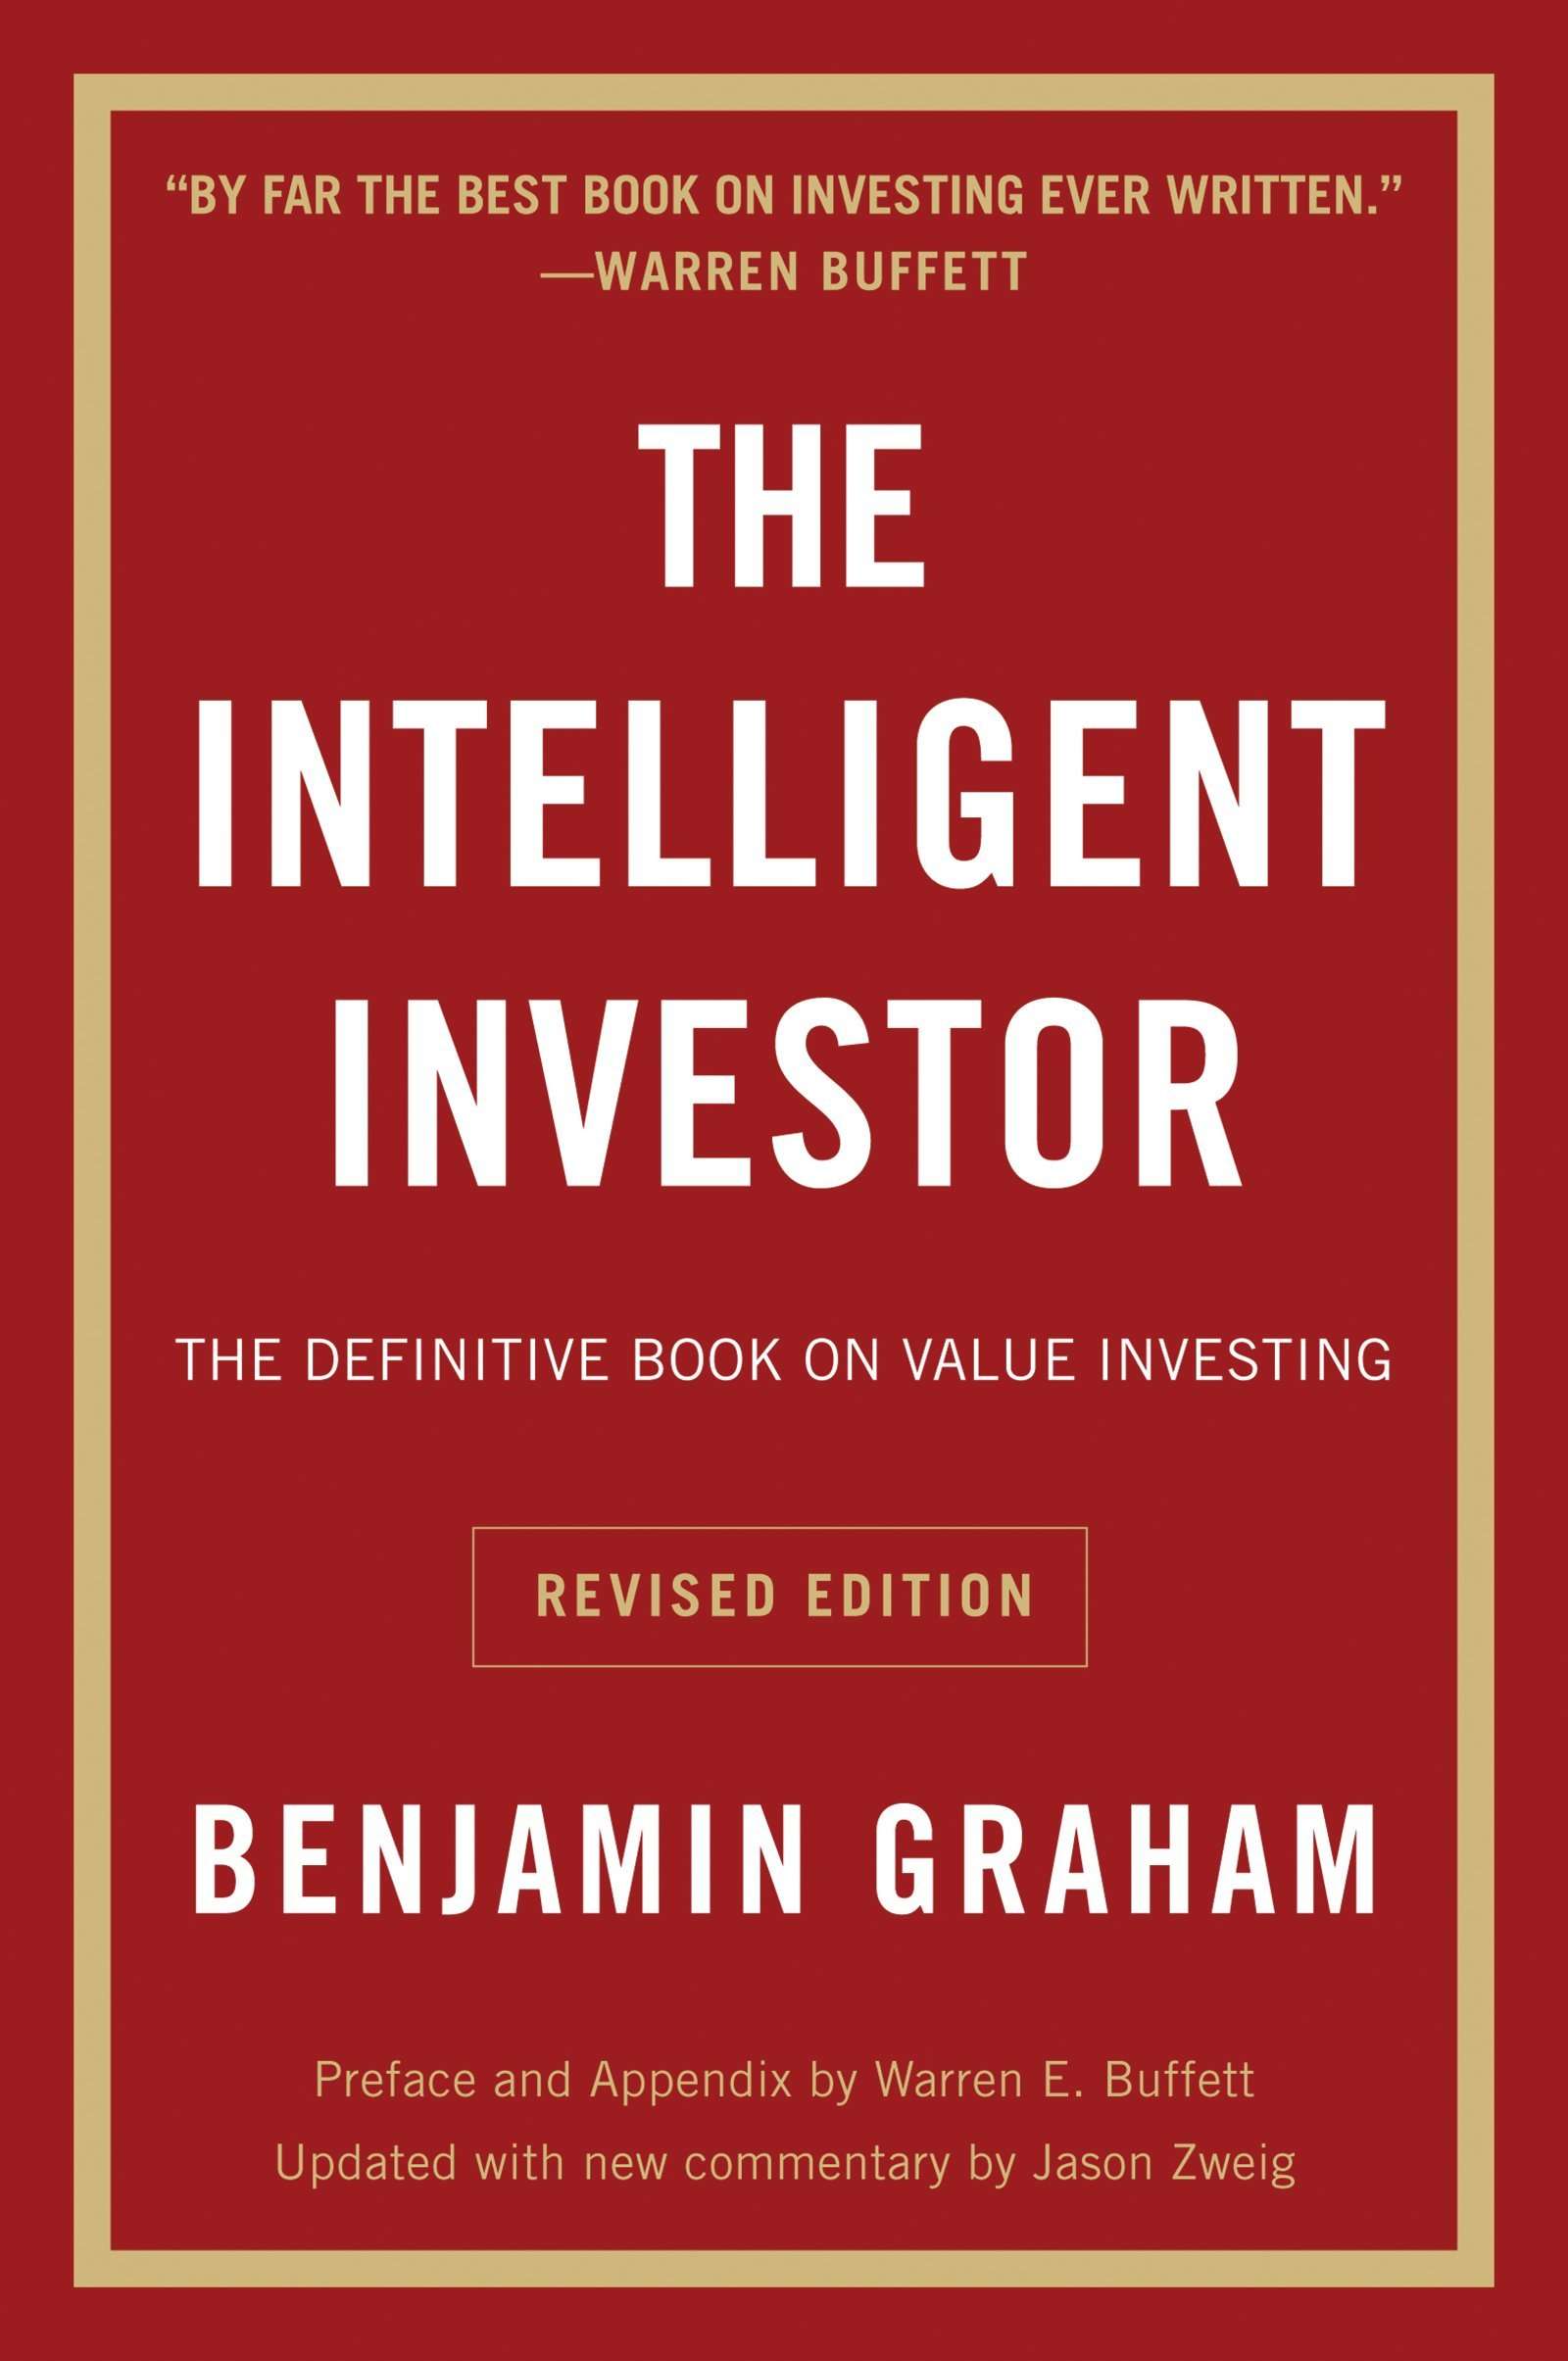 Berkshire-Hathaway CEO Warren Buffett: "The Intelligent Investor" by Benjamin Graham